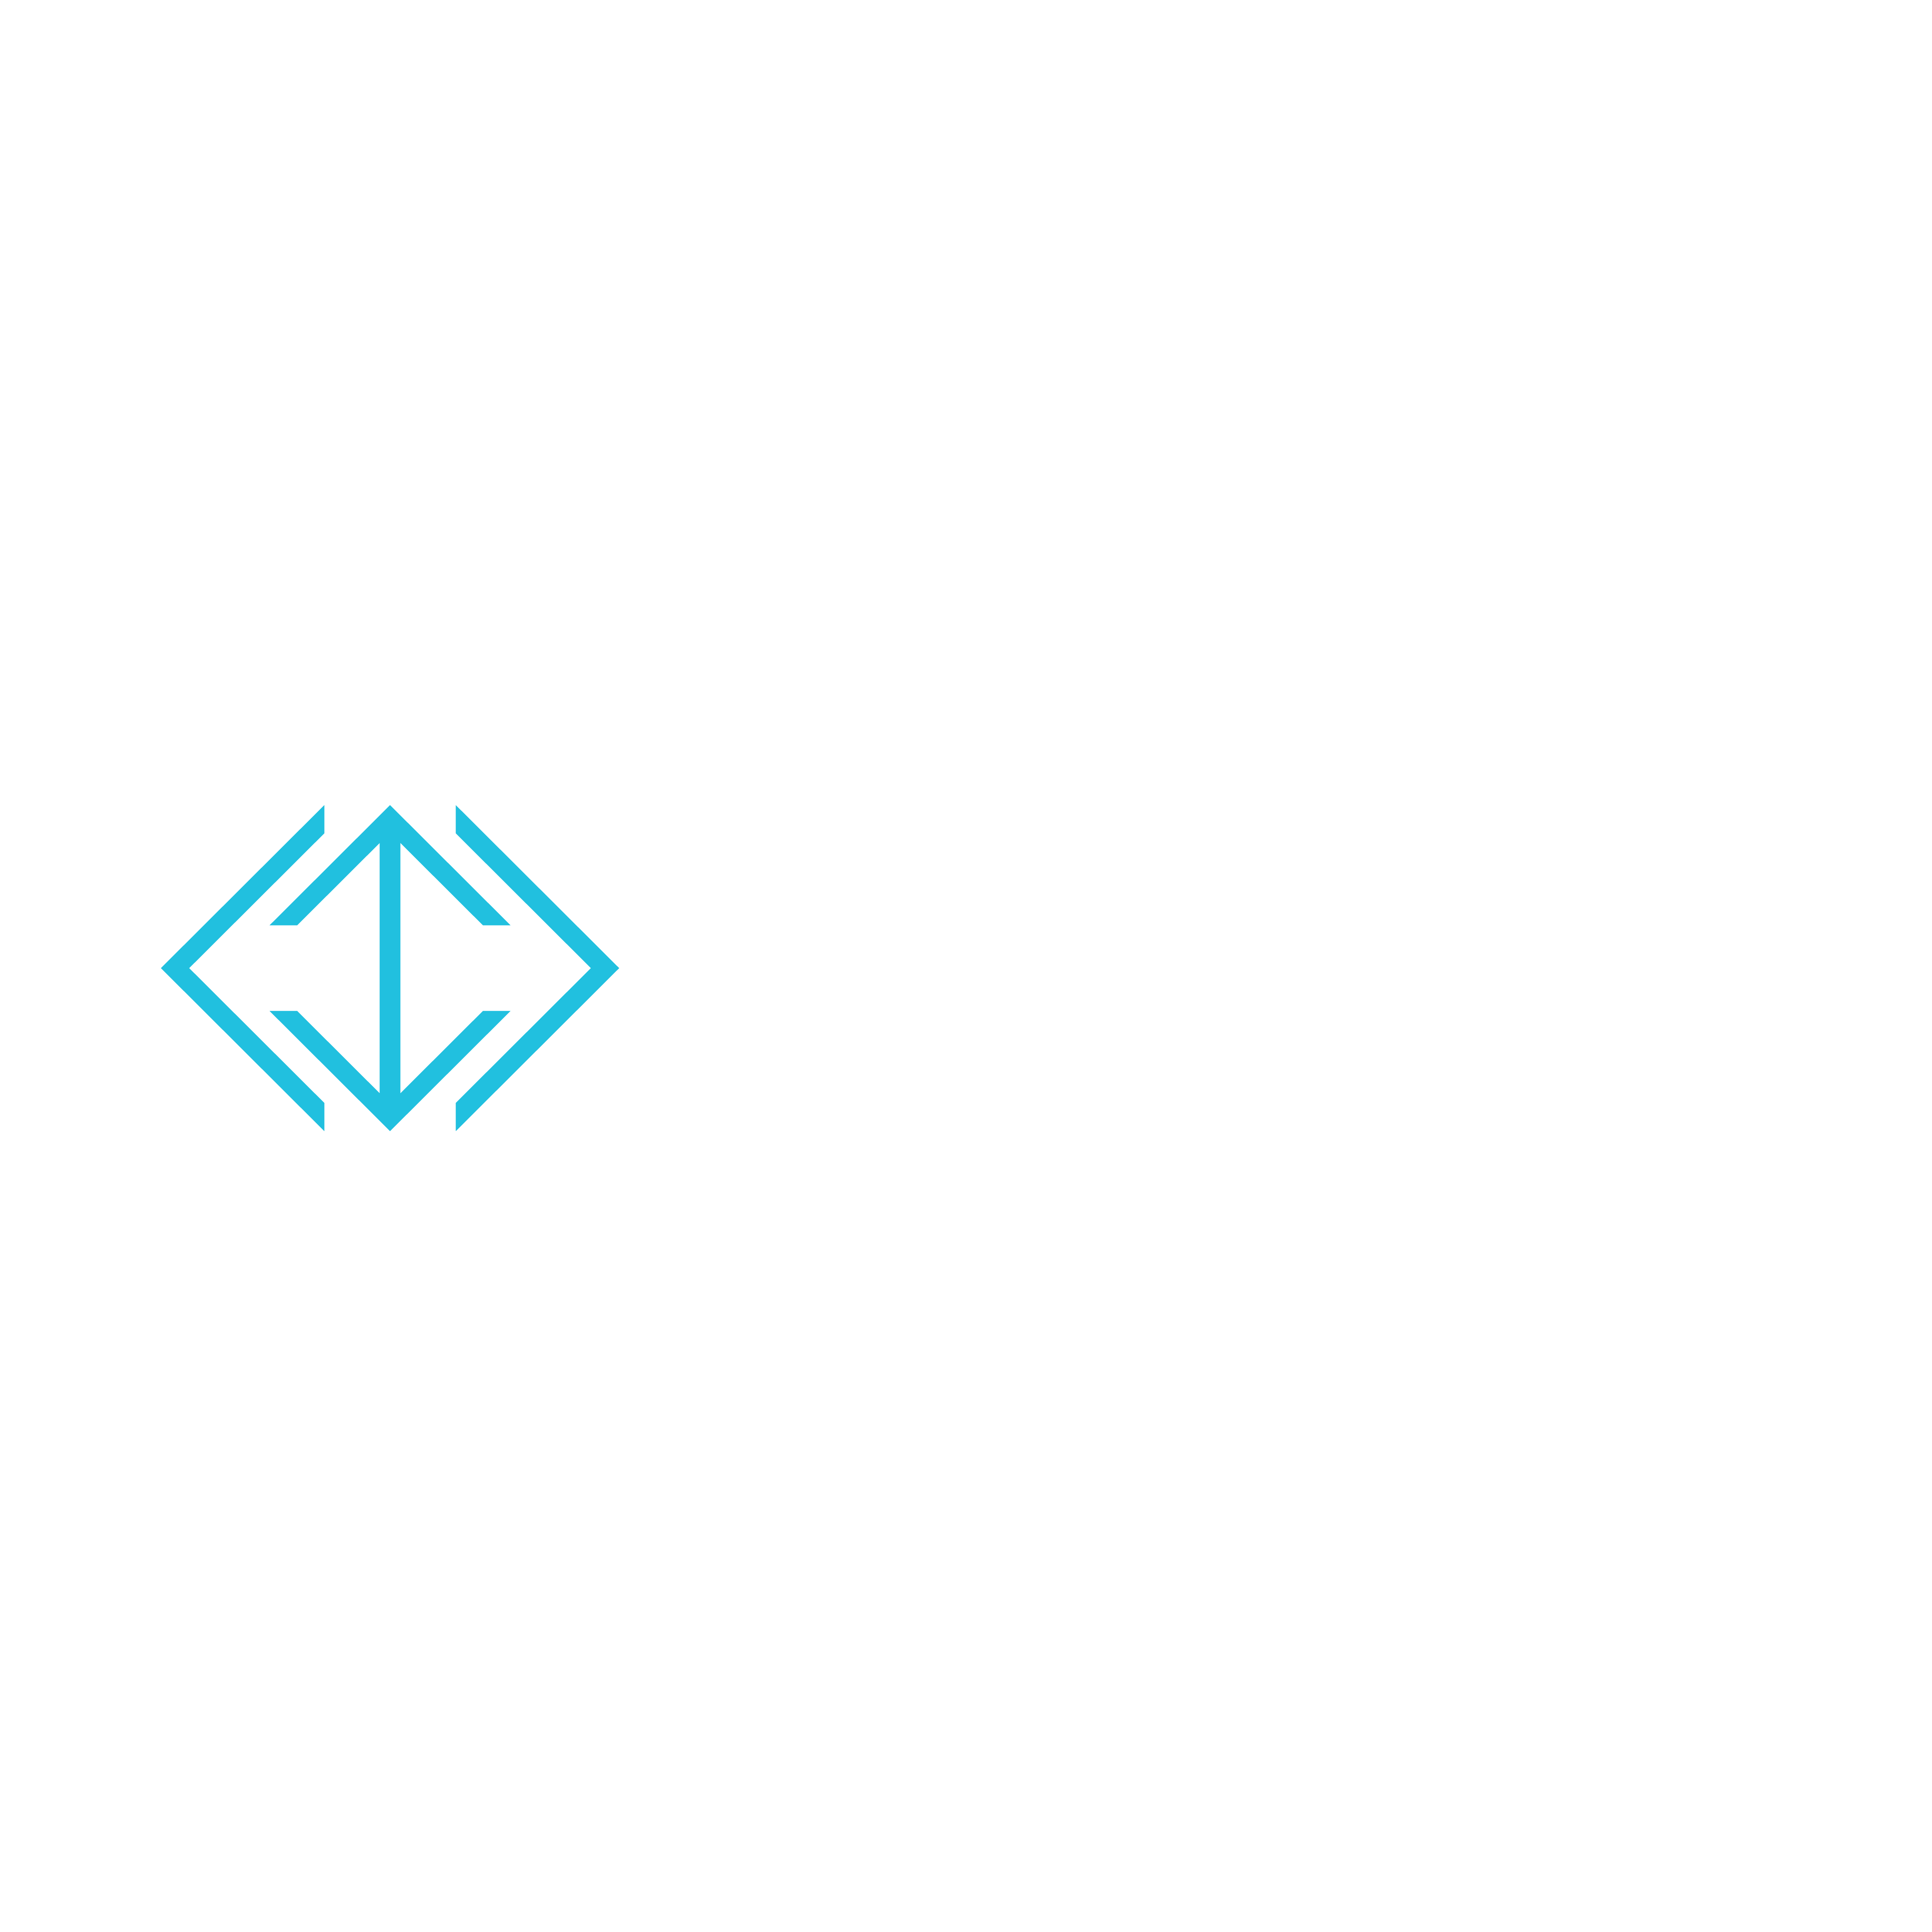 Elevated Health University